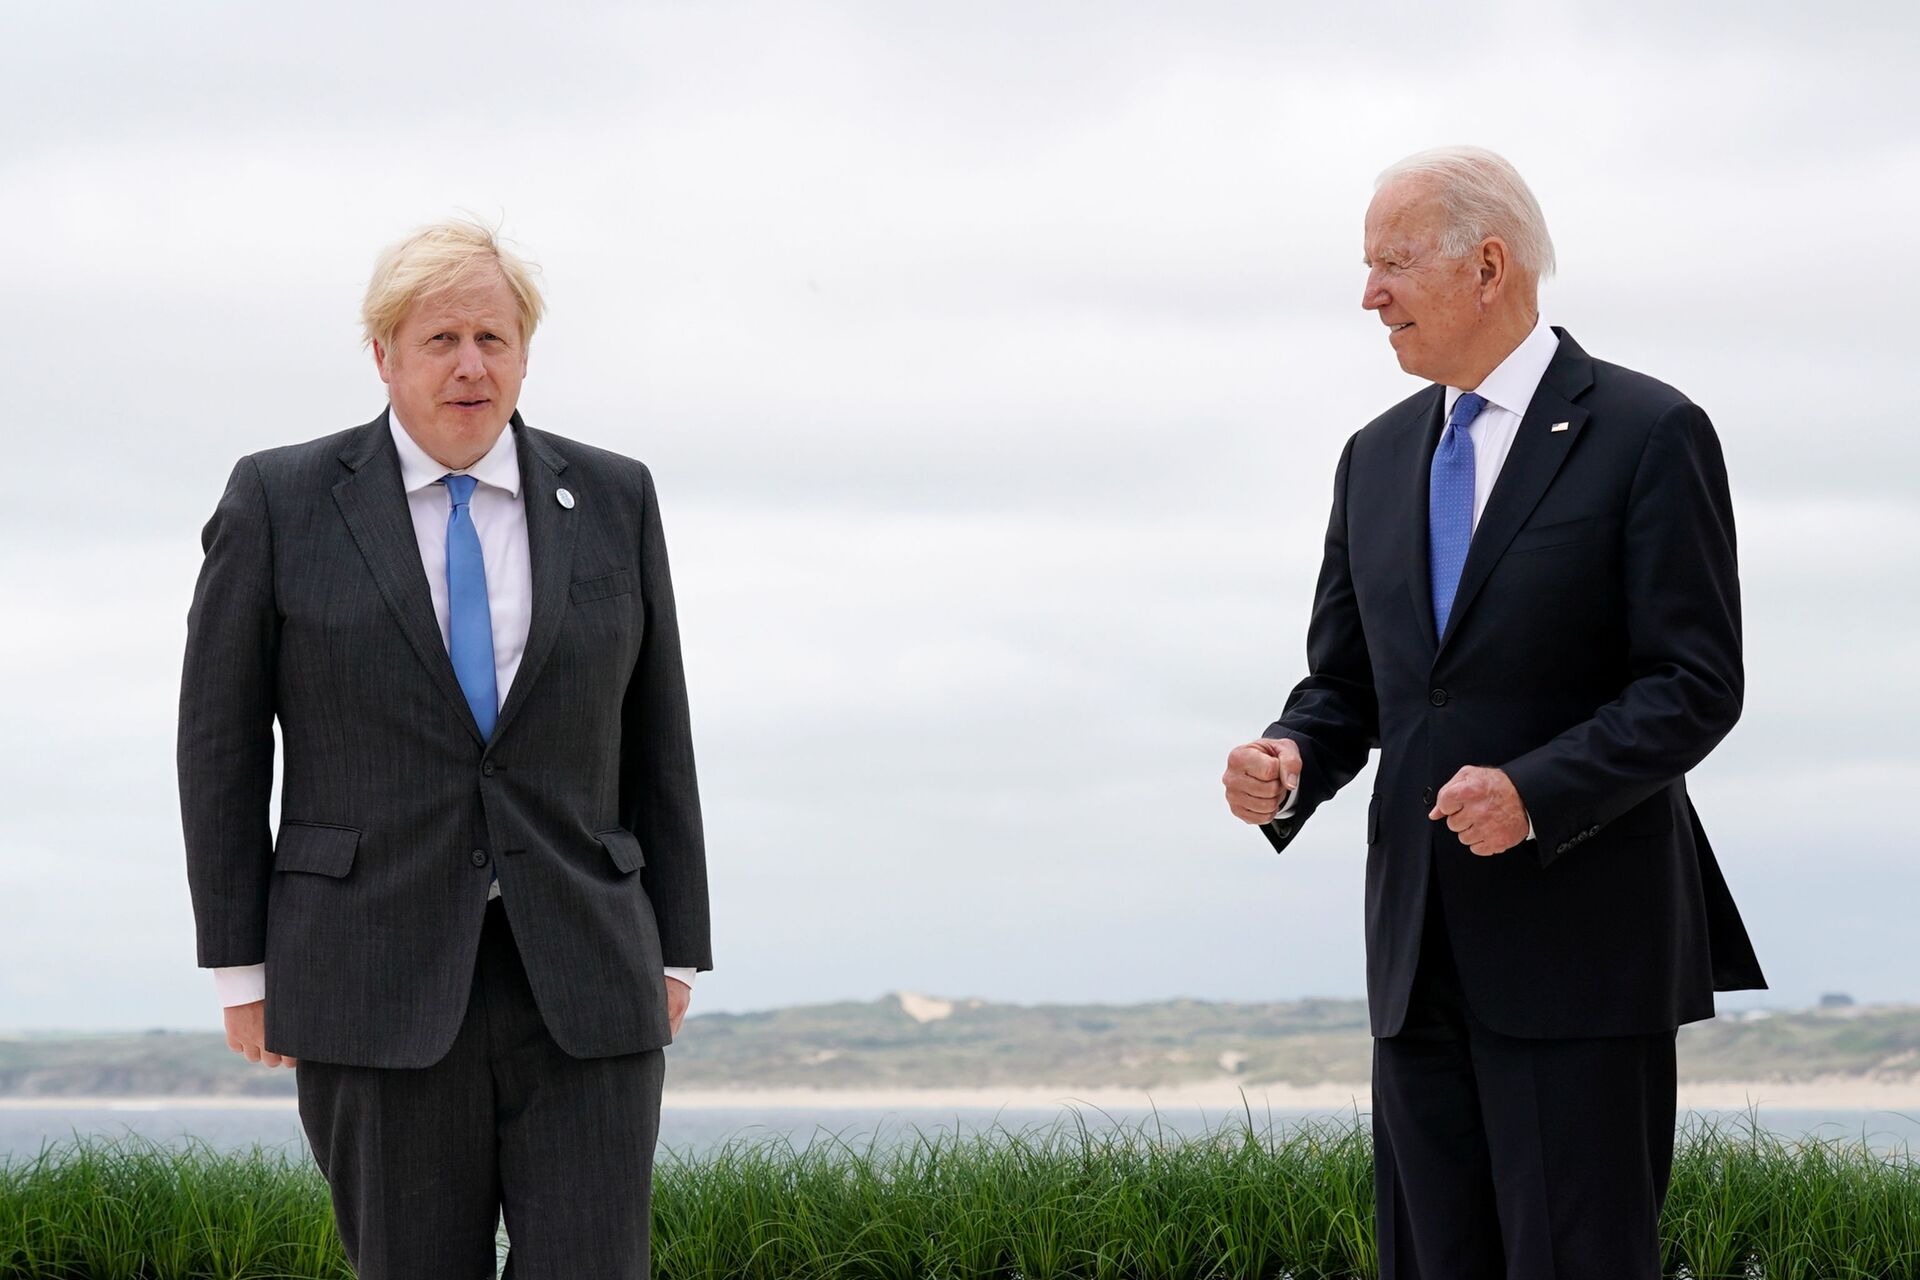 British Prime Minister Boris Johnson and U.S. President Joe Biden pose for photos at the G-7 summit, in Carbis Bay, Cornwall, Britain June 11, 2021 - Sputnik International, 1920, 07.09.2021